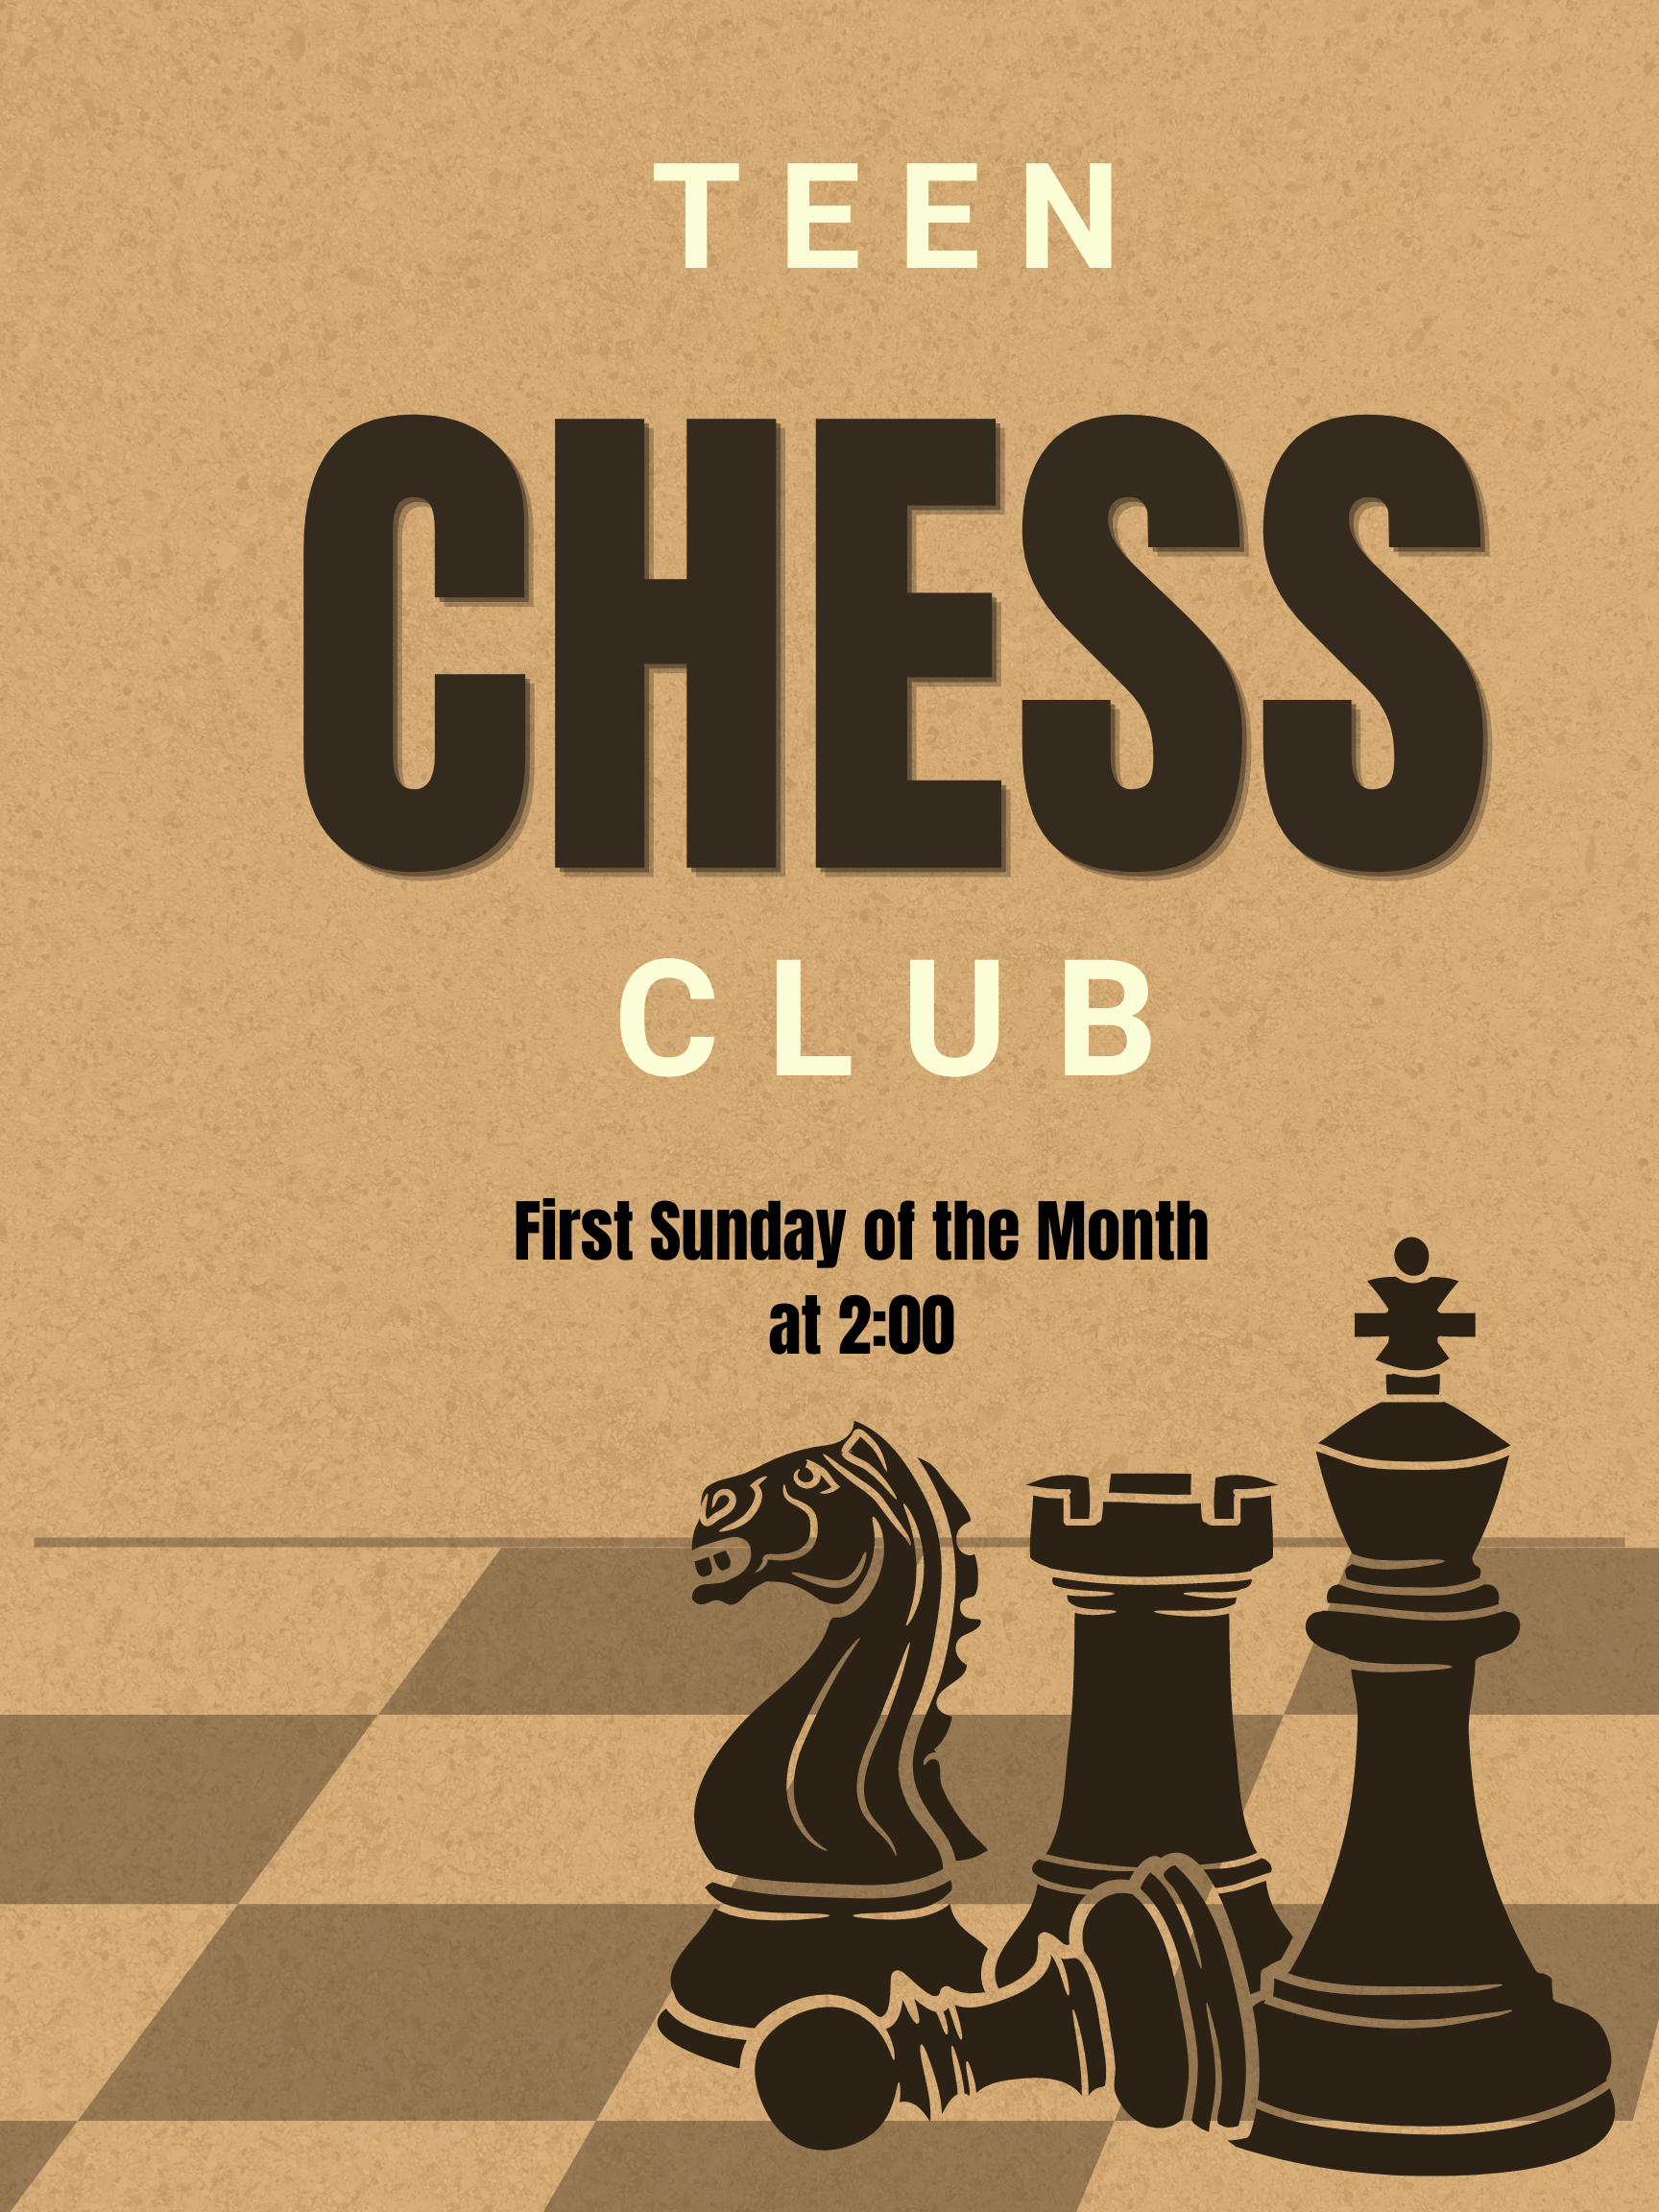 Teen Chess Club